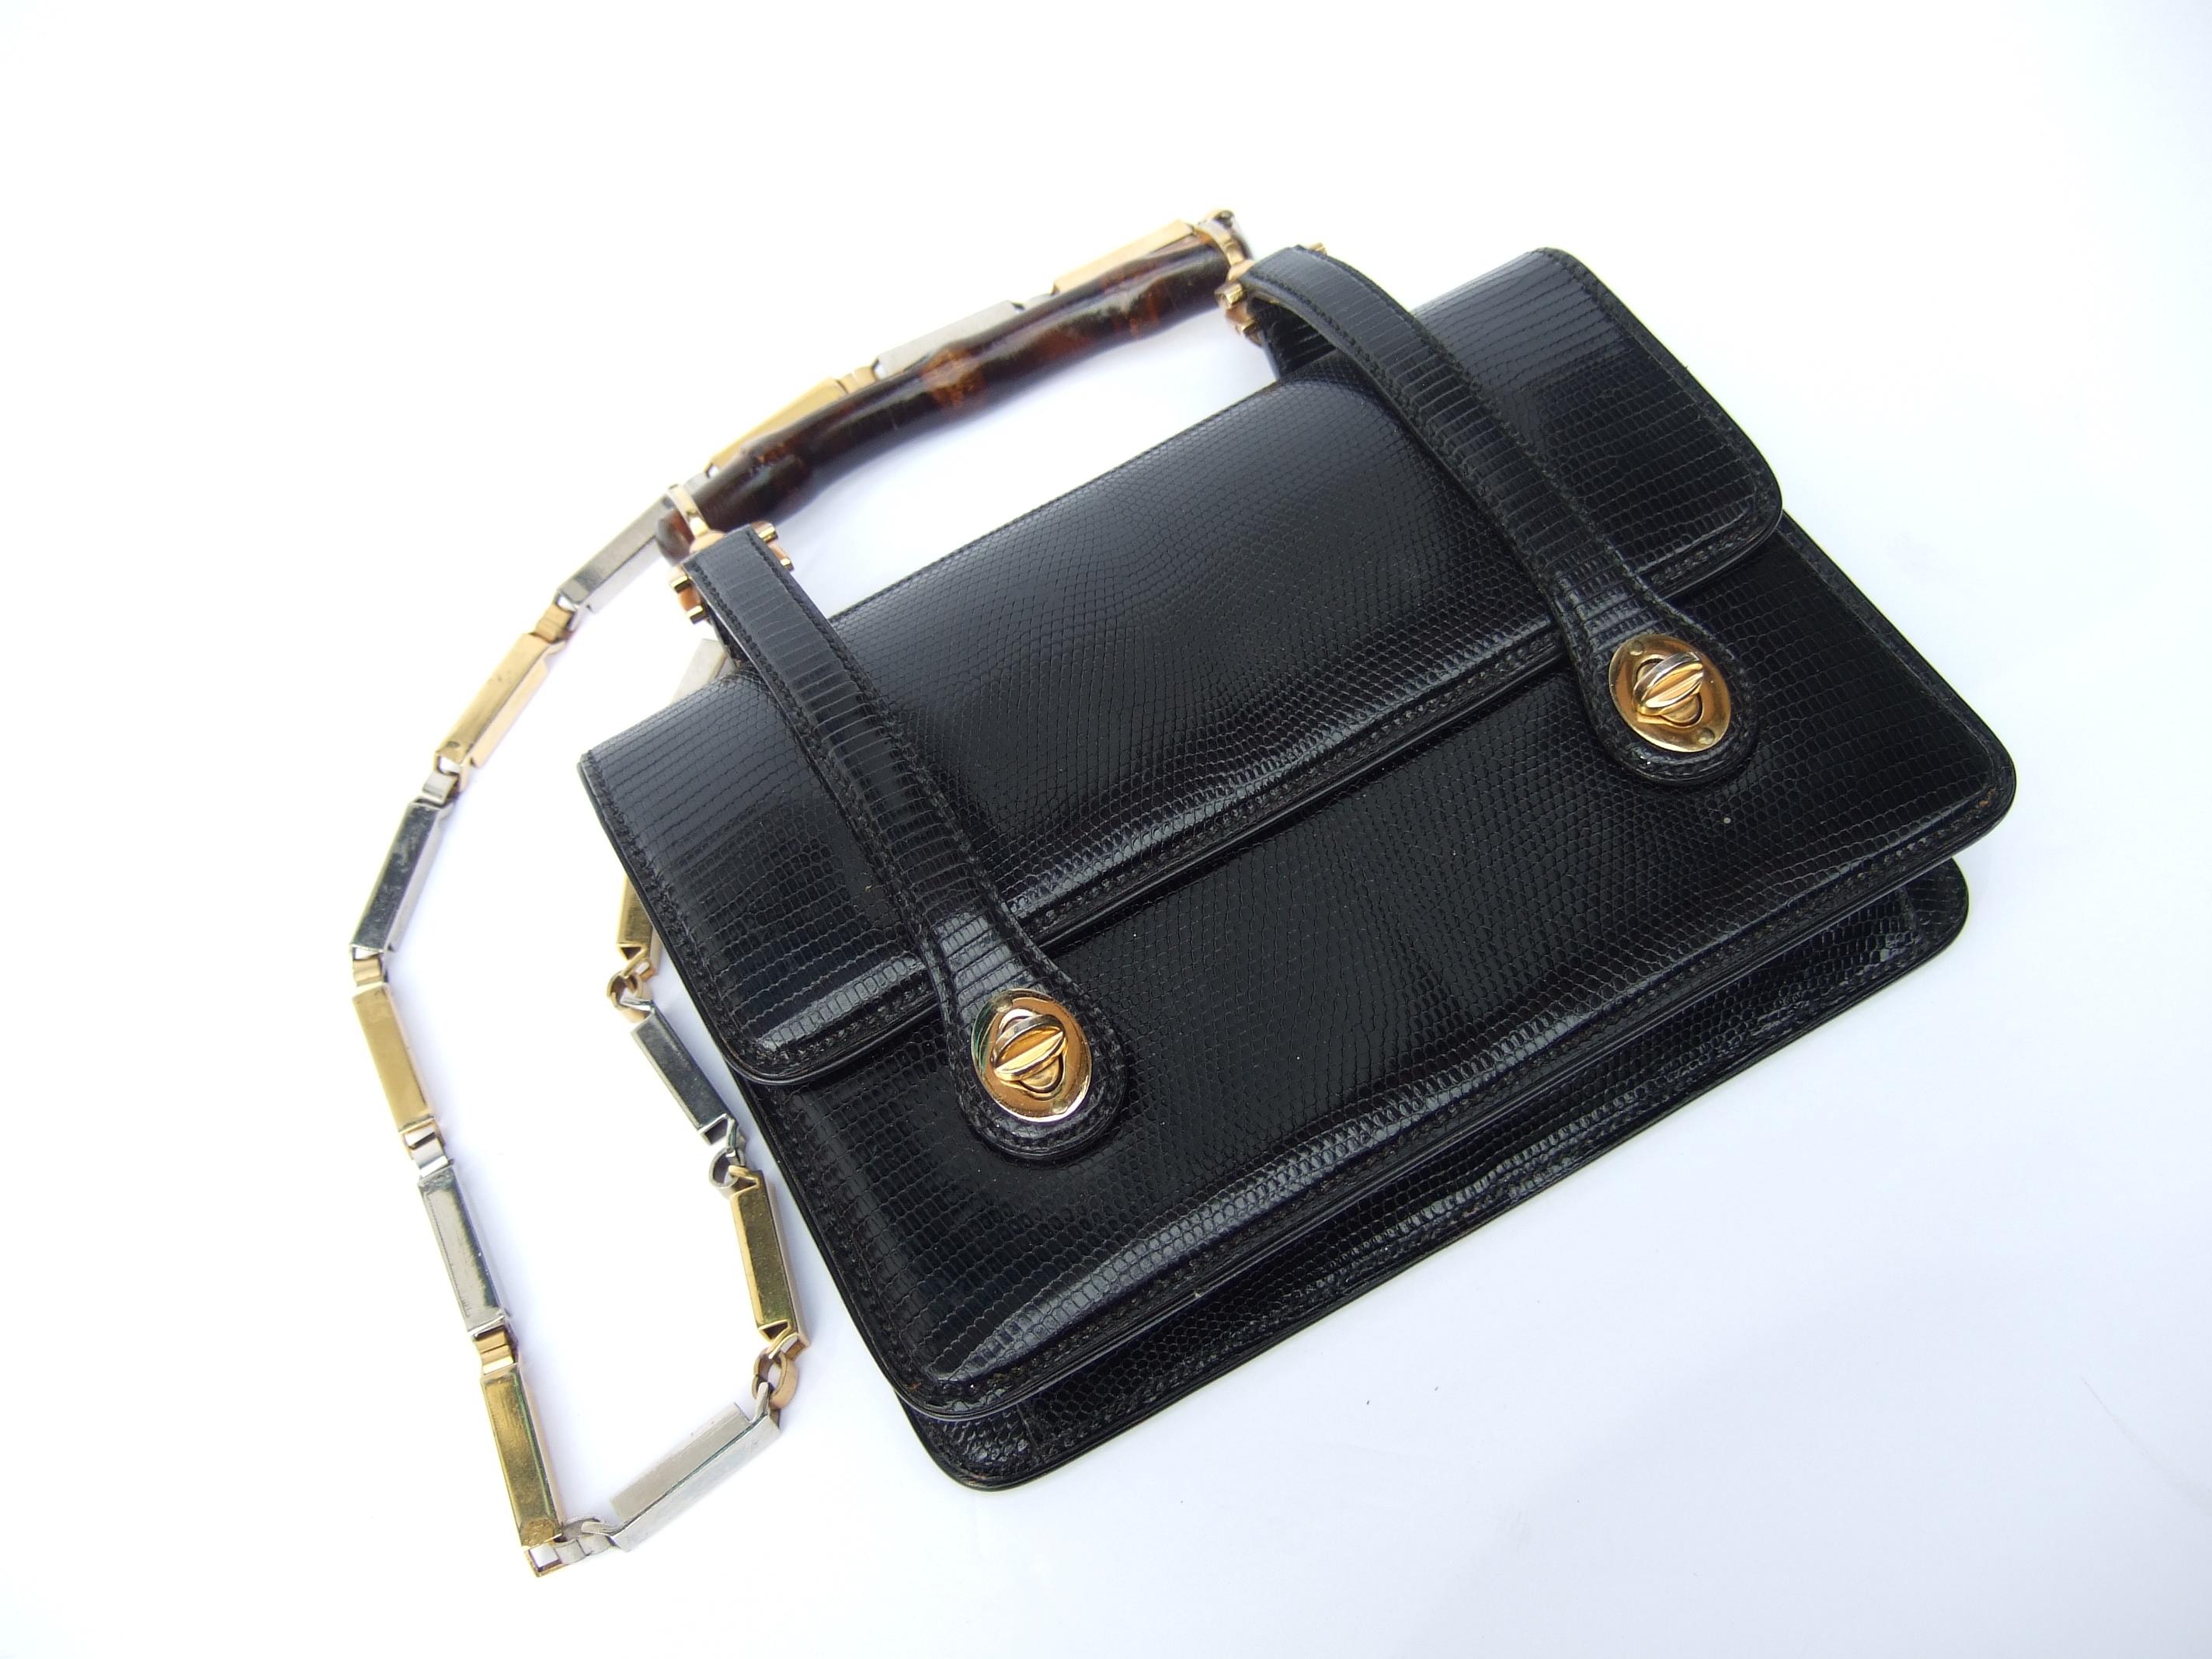 Rare Gucci Italian Black Lizard Leather Handbag - Shoulder Bag c 1970s 2